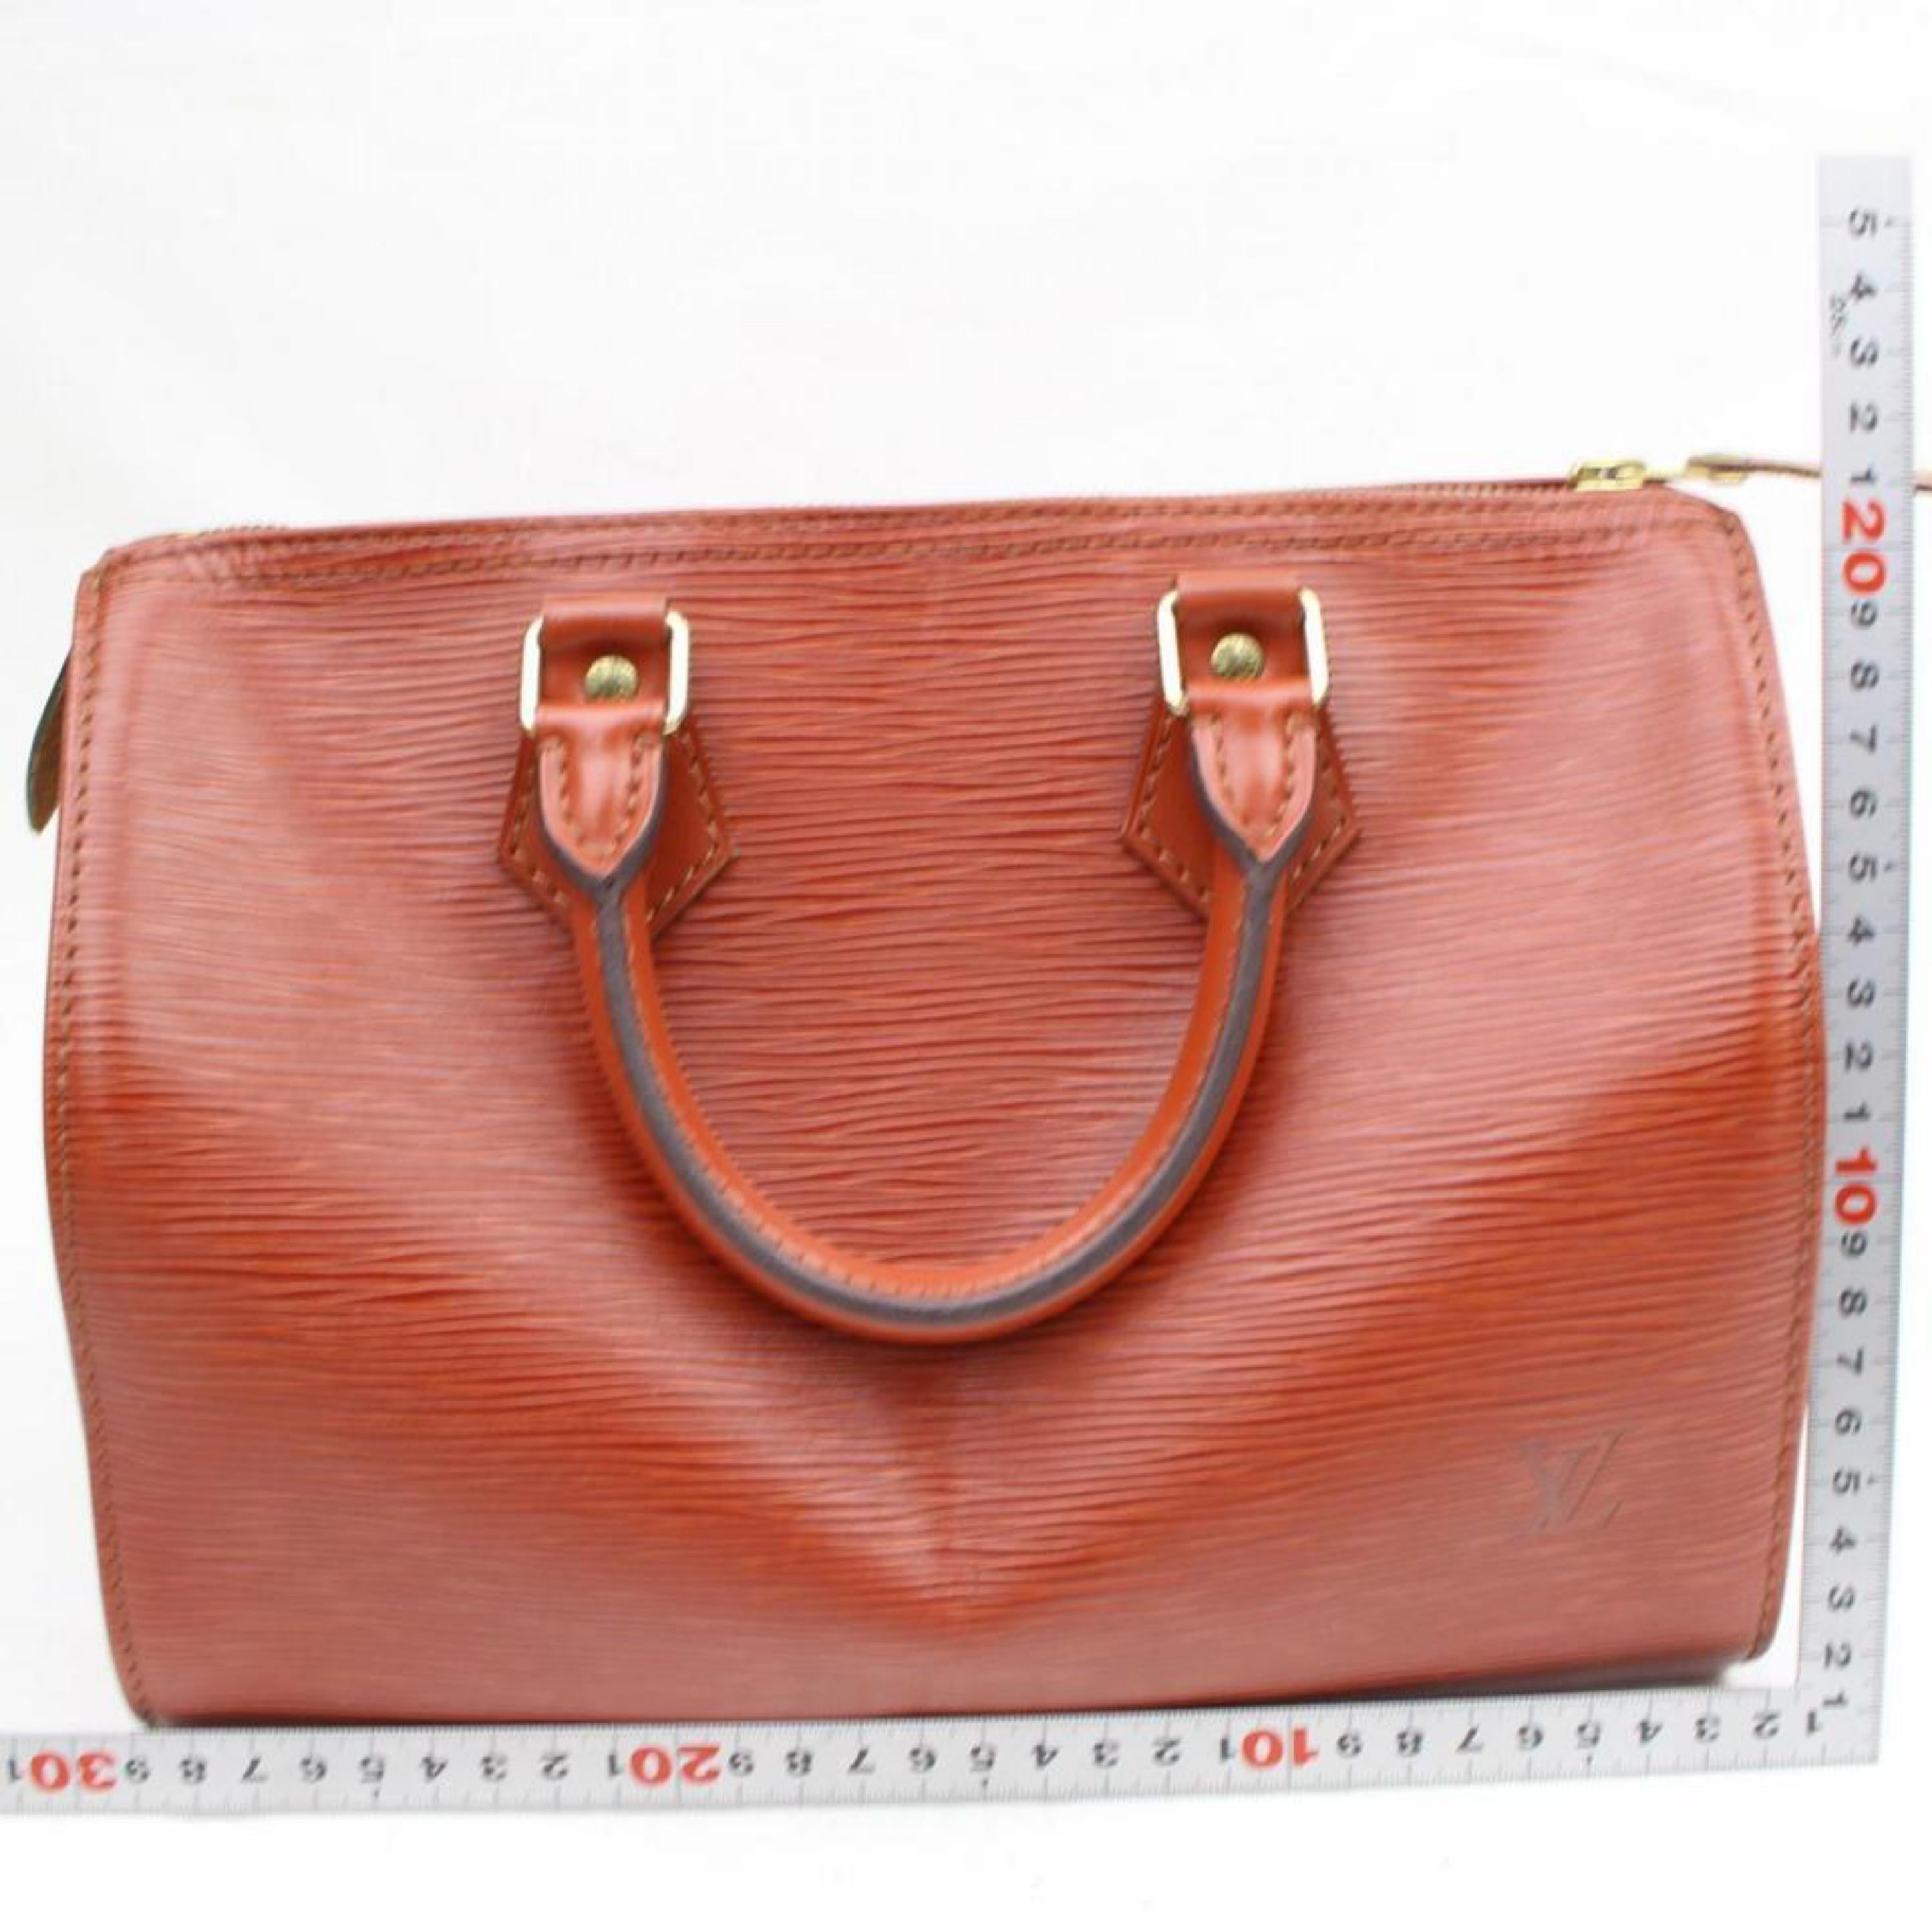 Louis Vuitton Speedy 25 869648 Brown Leather Satchel For Sale 5